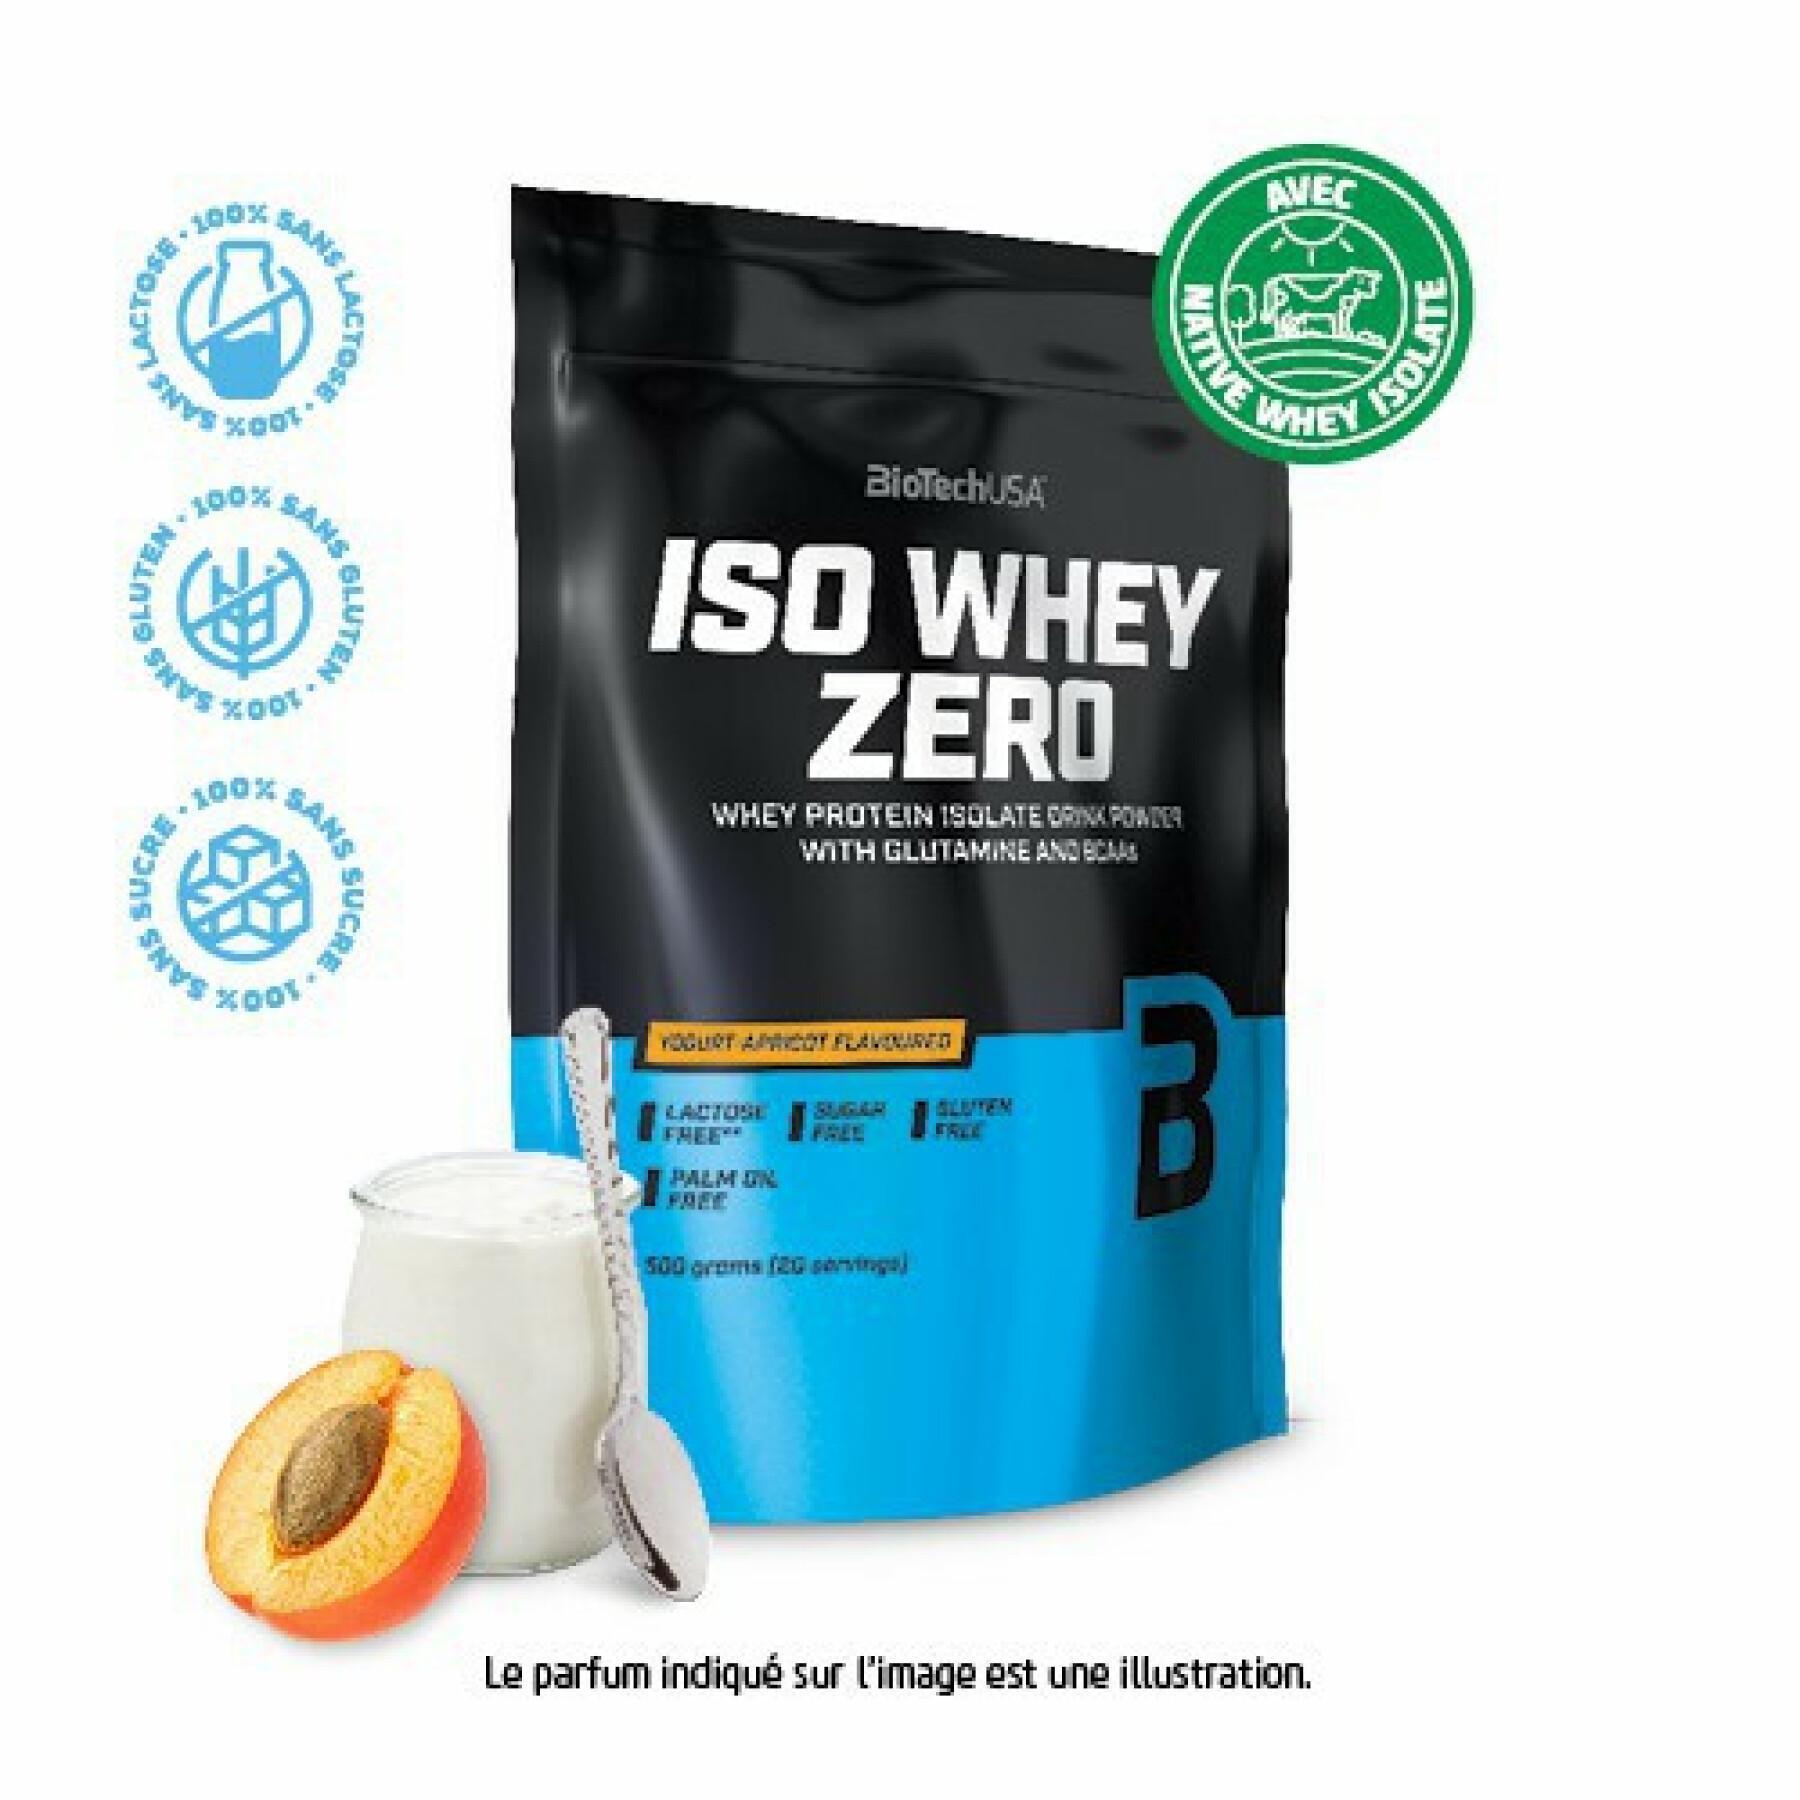 Förpackning med 10 proteinpåsar Biotech USA iso whey zero lactose free - Brioche á la cannelle - 500g